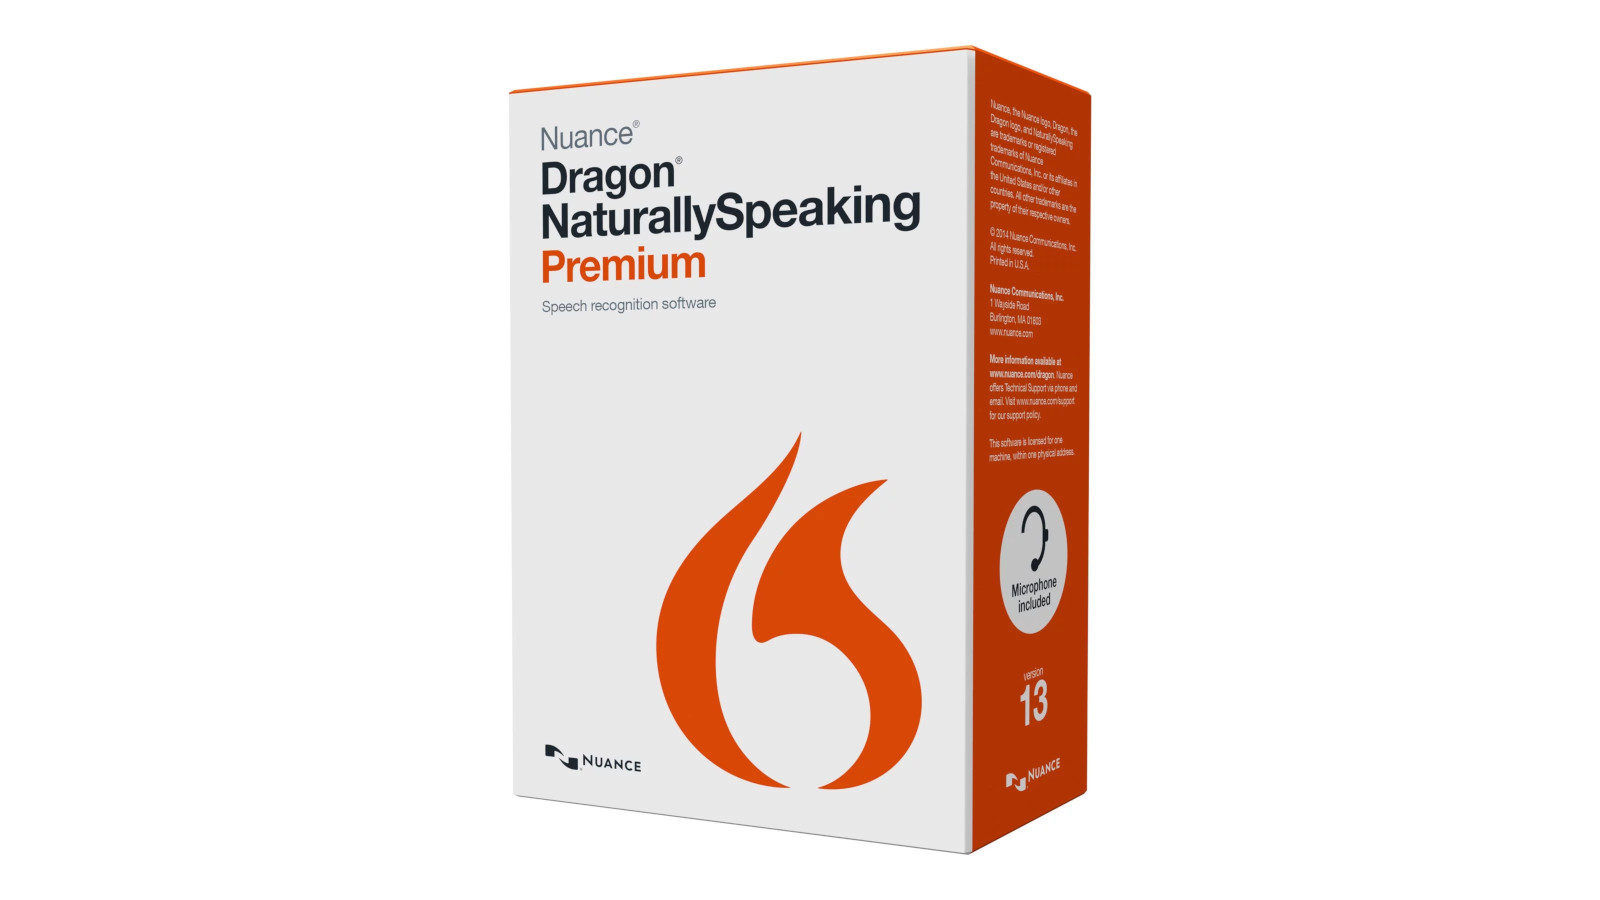 Nuance Dragon NaturallySpeaking Premium 13 Key (Lifetime / 1 PC) [USD 13.73]